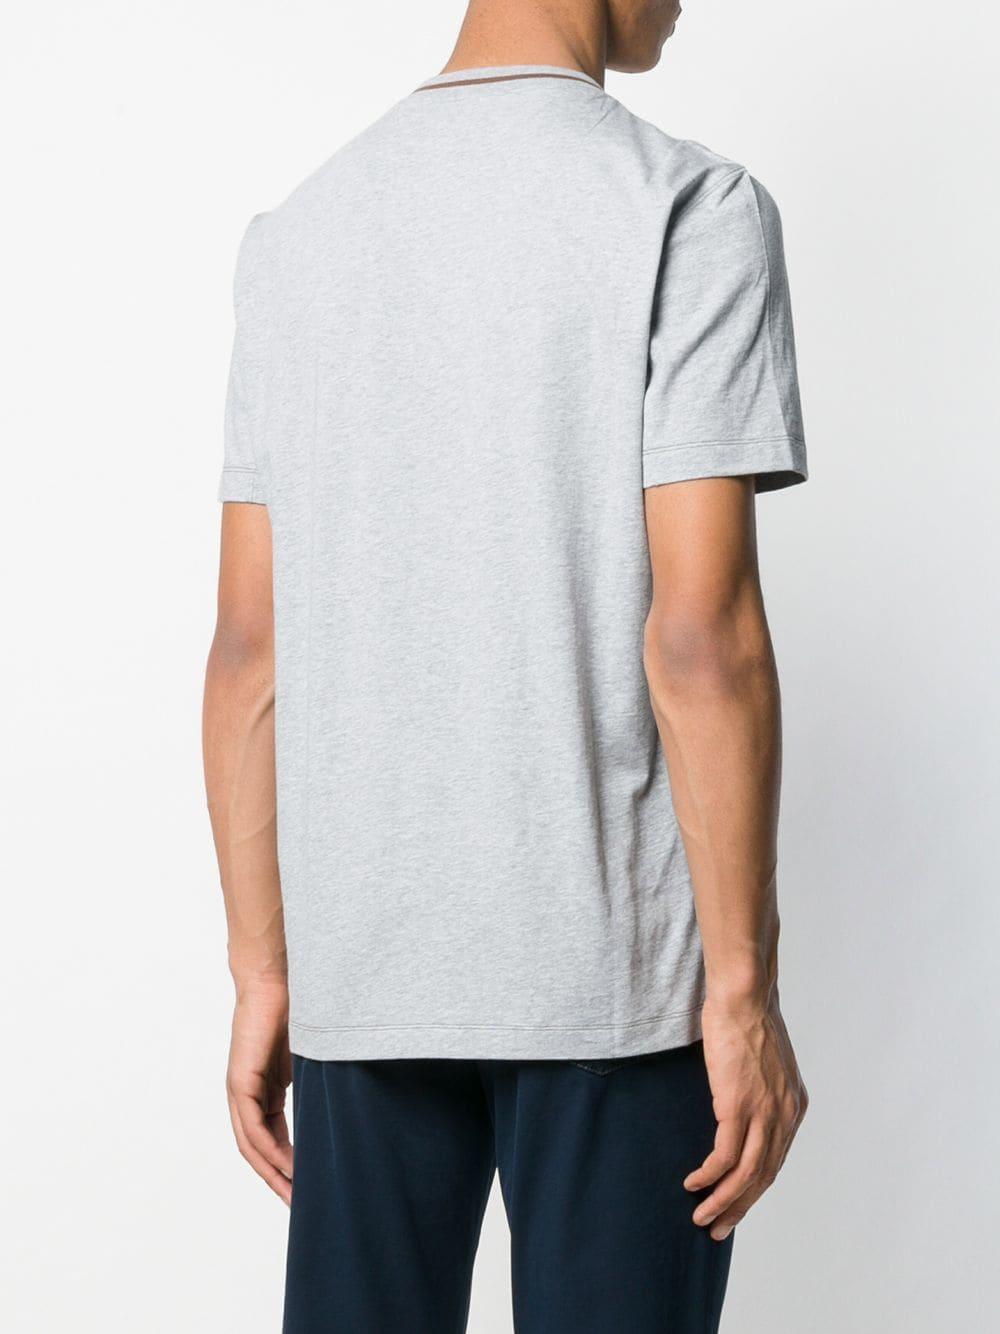 Brunello Cucinelli Cotton T-shirt in Gray for Men - Lyst